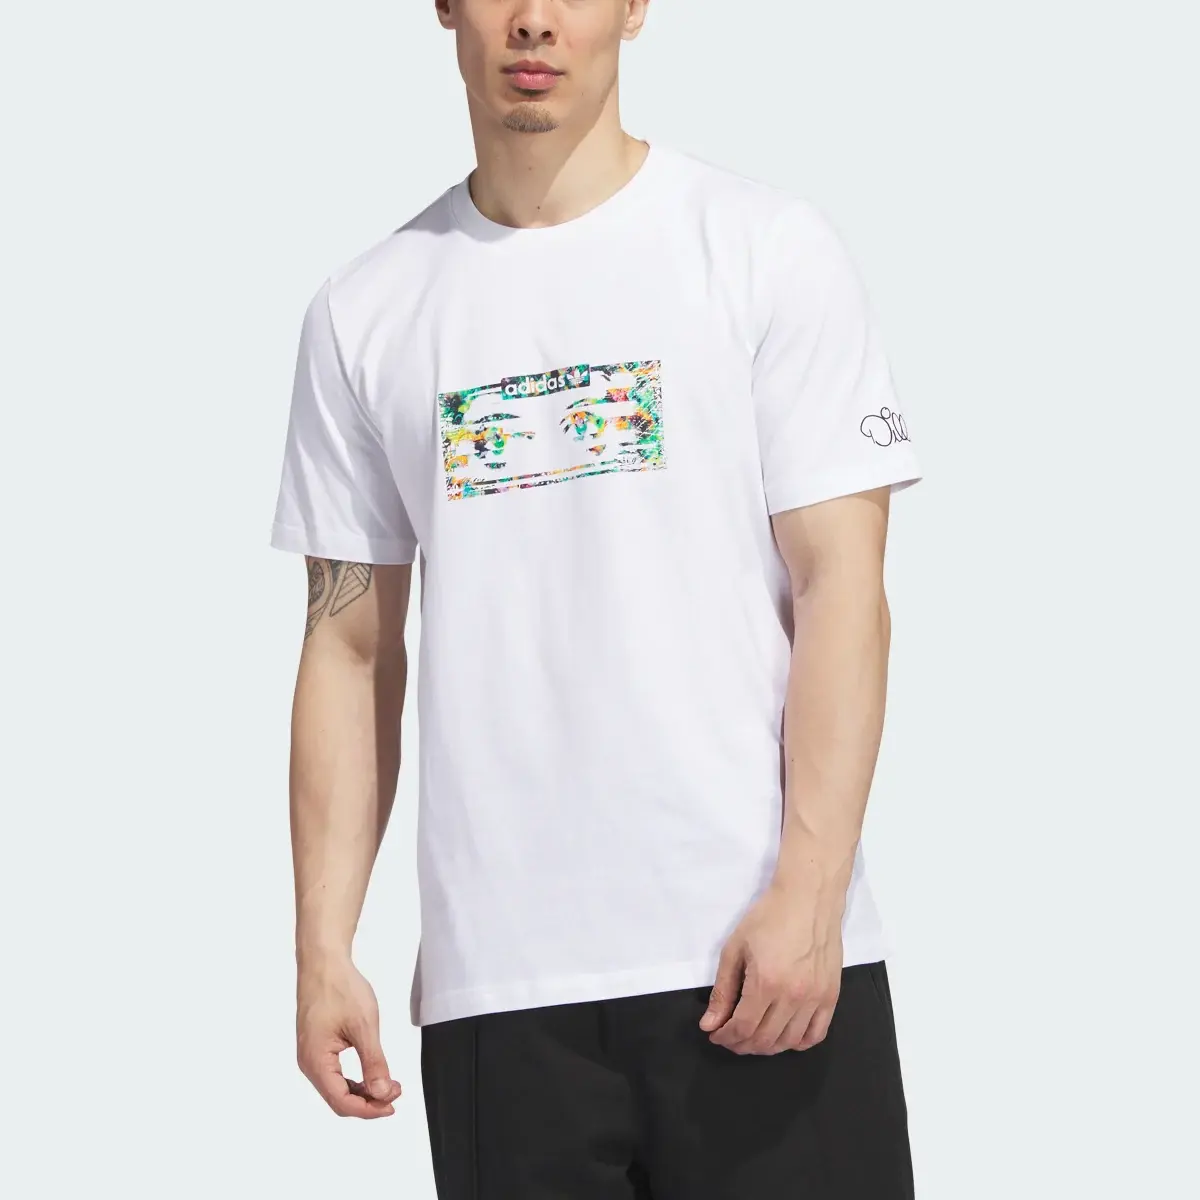 Adidas T-shirt Dill. 1